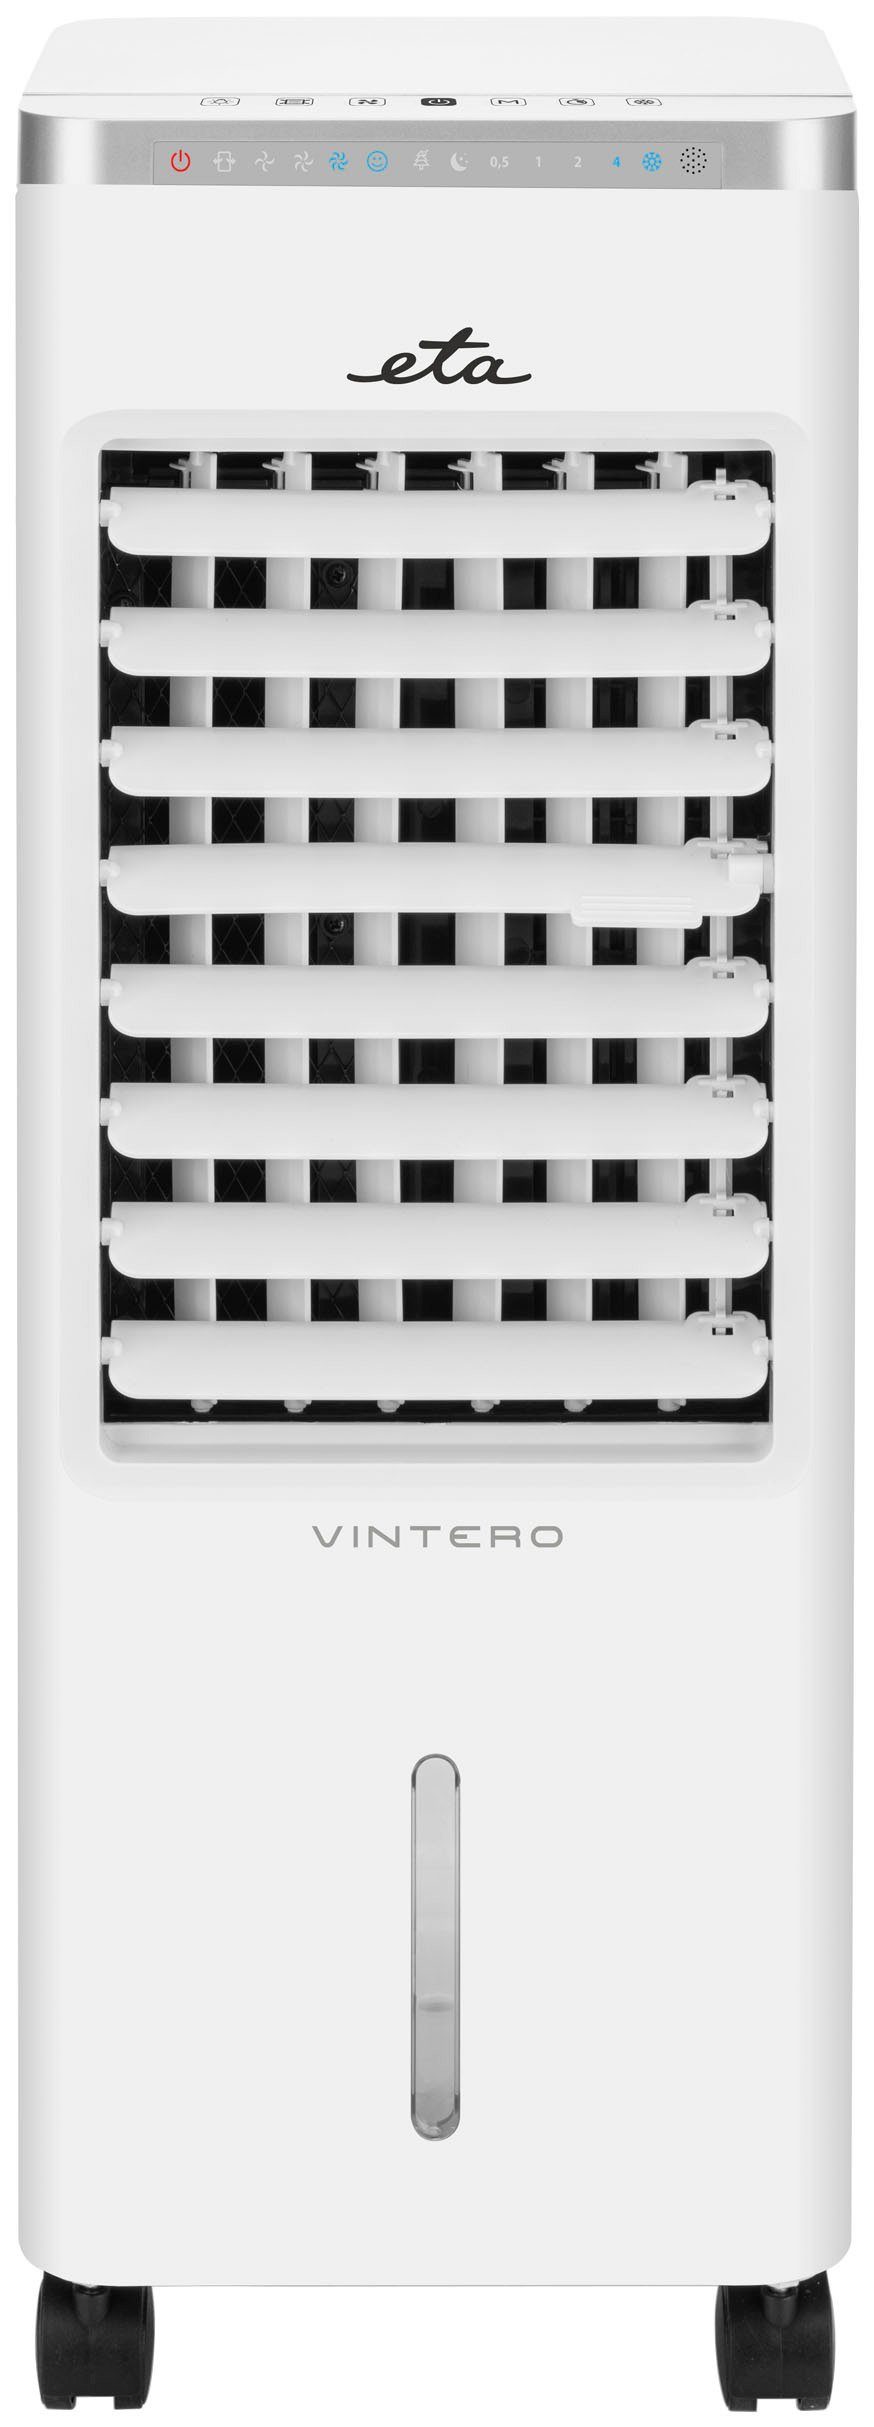 Ventilatorkombigerät Befeuchter/Ventilator/Kühler eta 3-in-1 Fassungsvermögen Luftkühler, "Vintero", 5,6 l